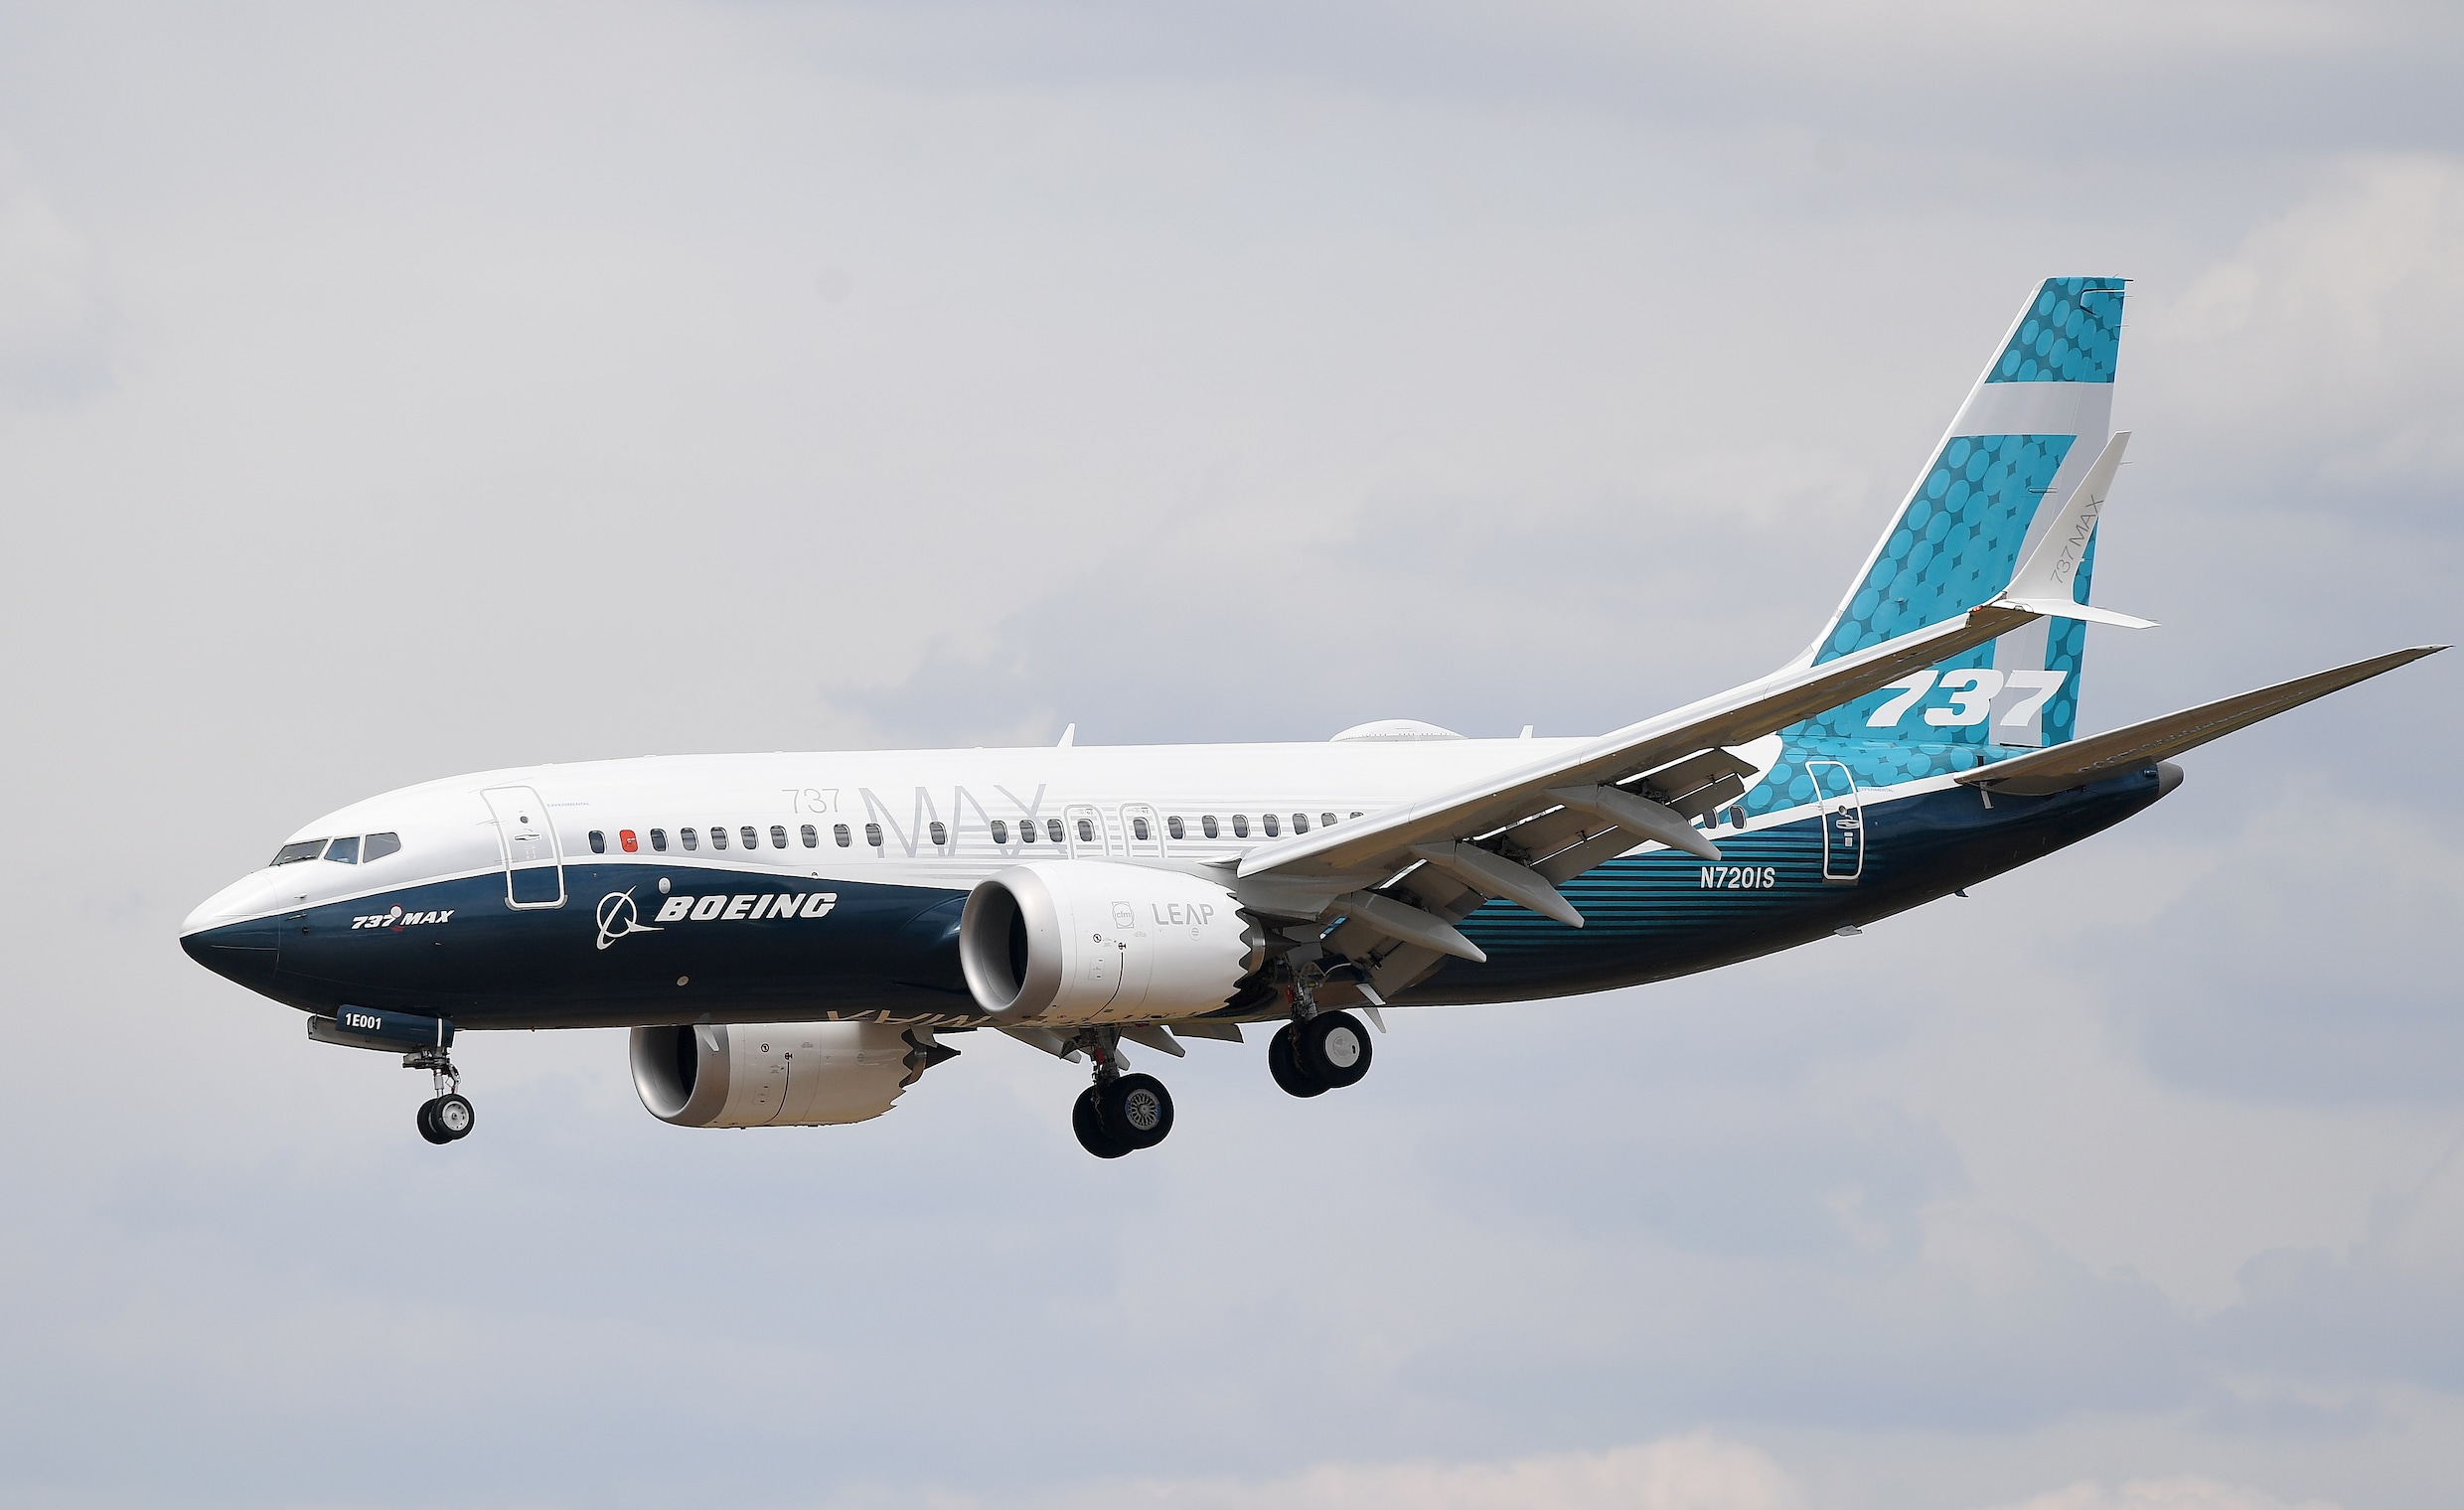 Hele Europese luchtruim gesloten voor nieuwste Boeings na twee crashes